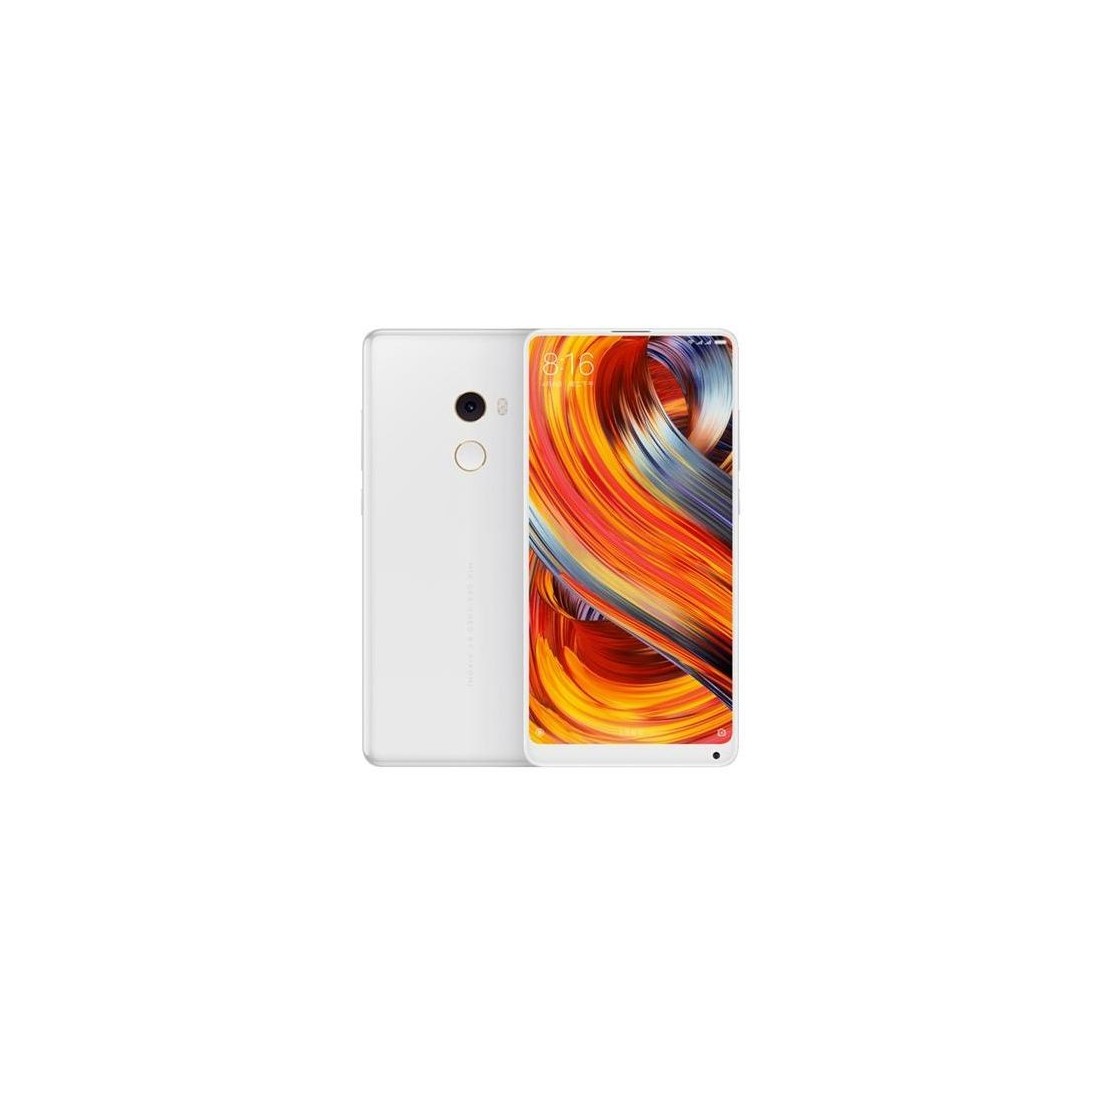 Xiaomi Mi Mix 2 Unibody Dual SIM Special Edition - 128GB, 8GB RAM, 4G LTE, White